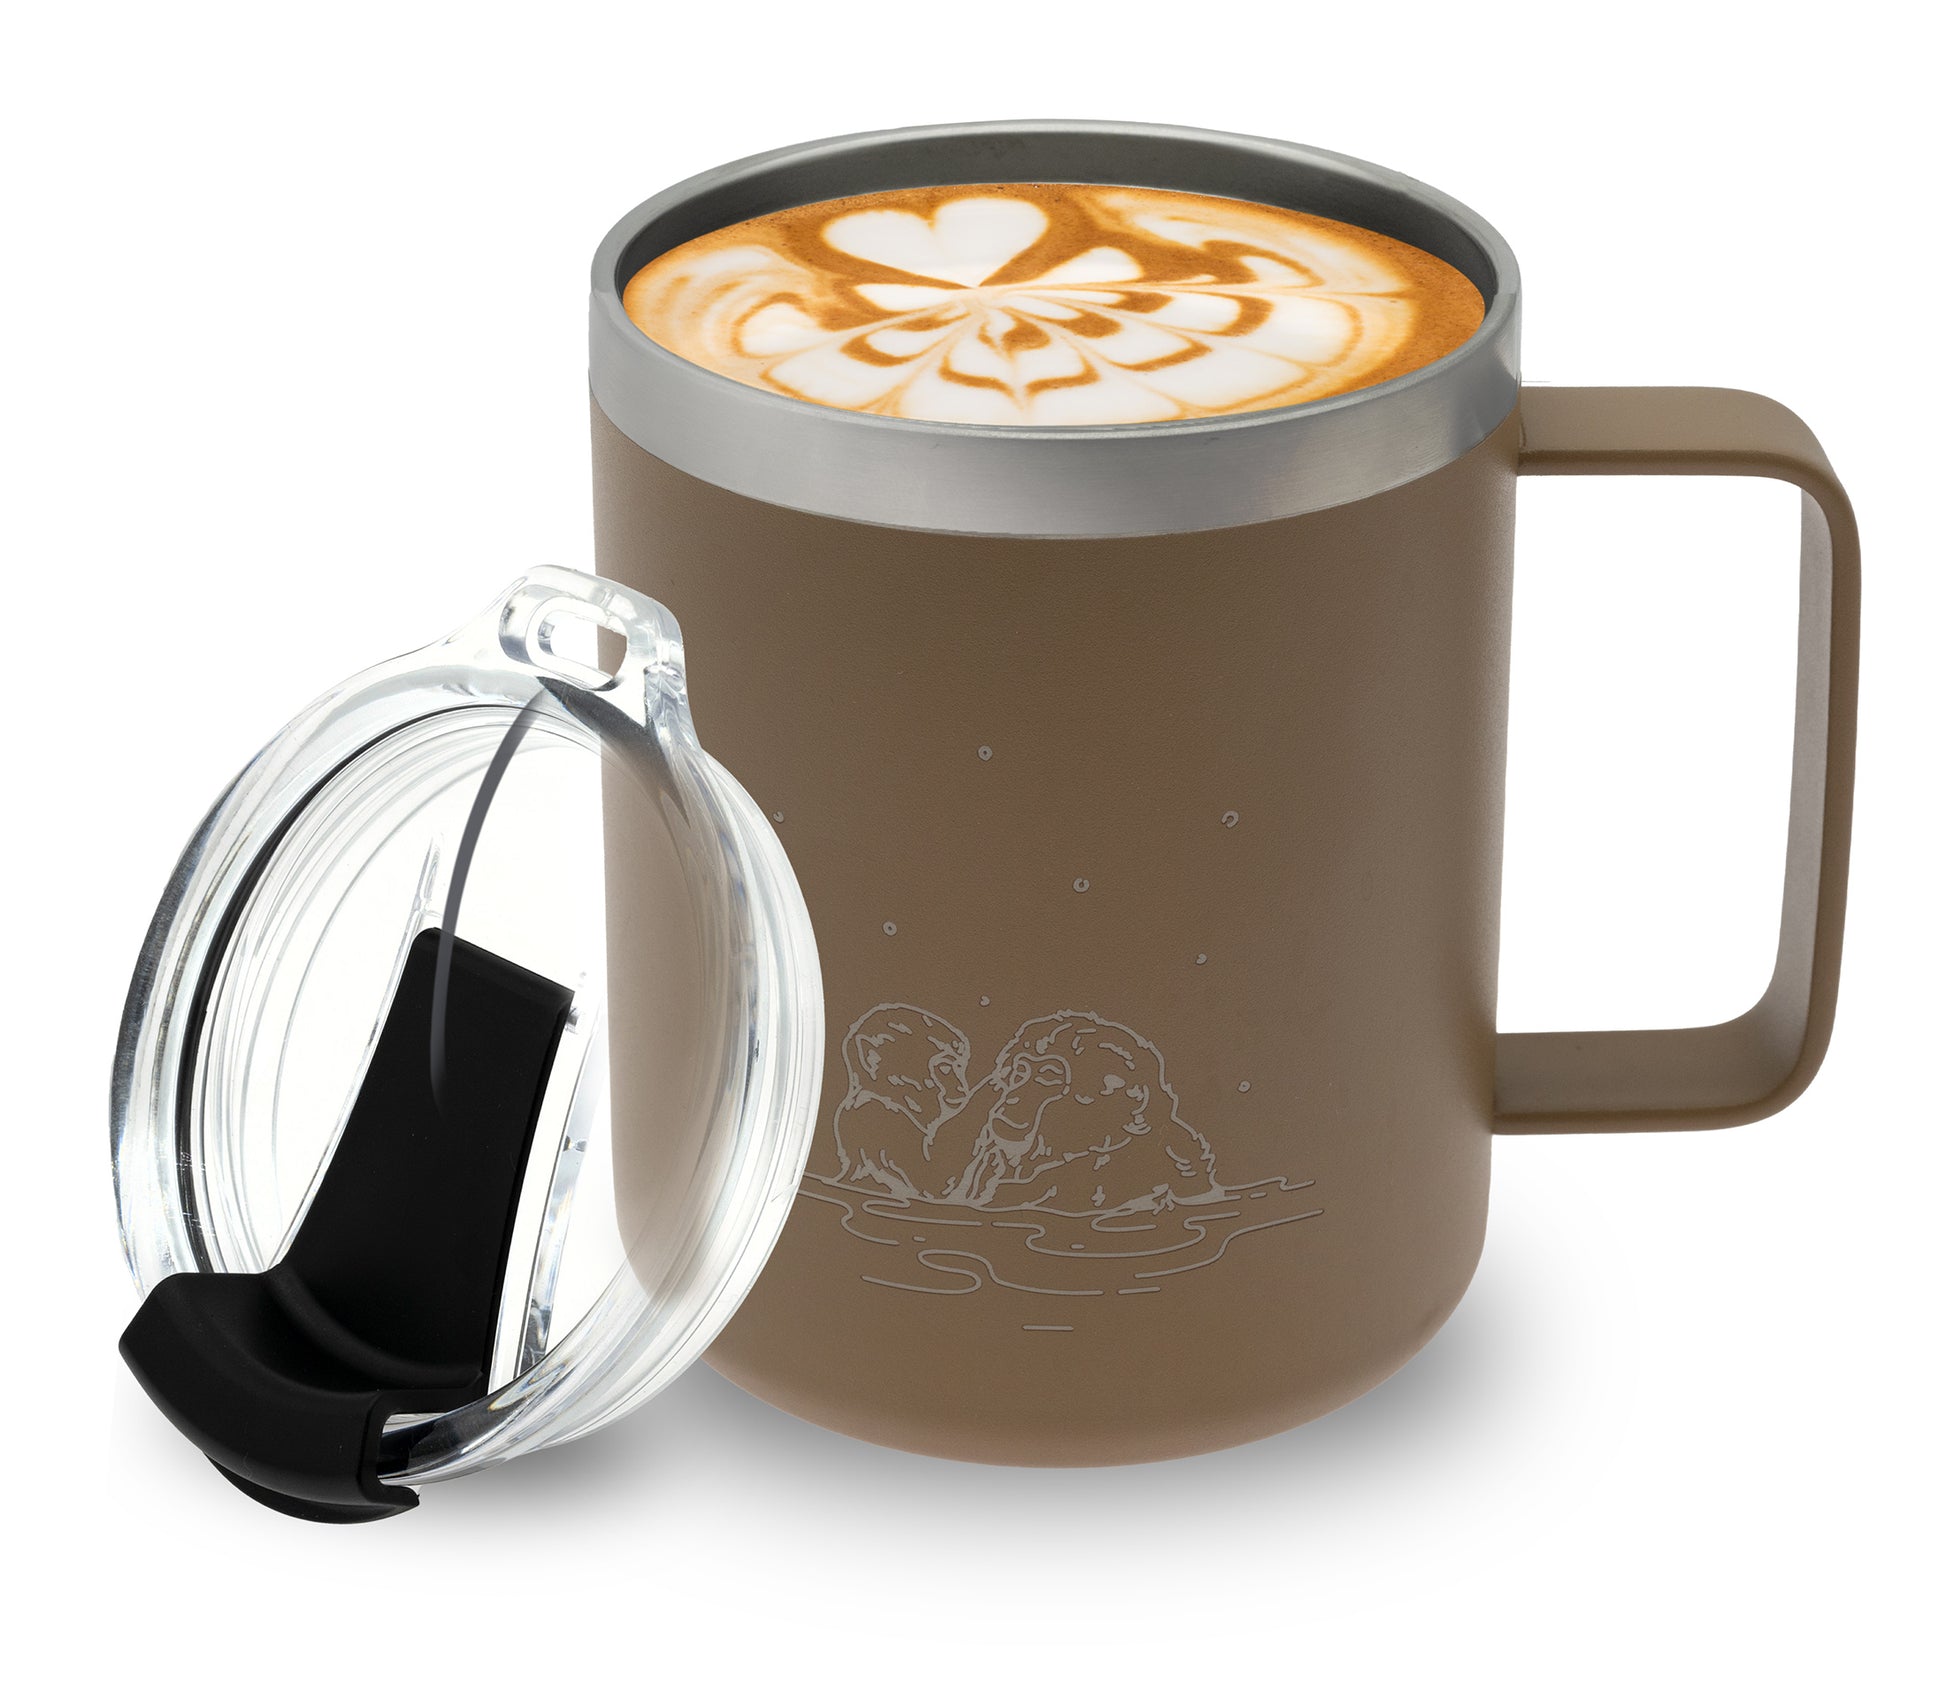 Promotional 12 oz Vacuum Insulated Coffee Mug $8.93